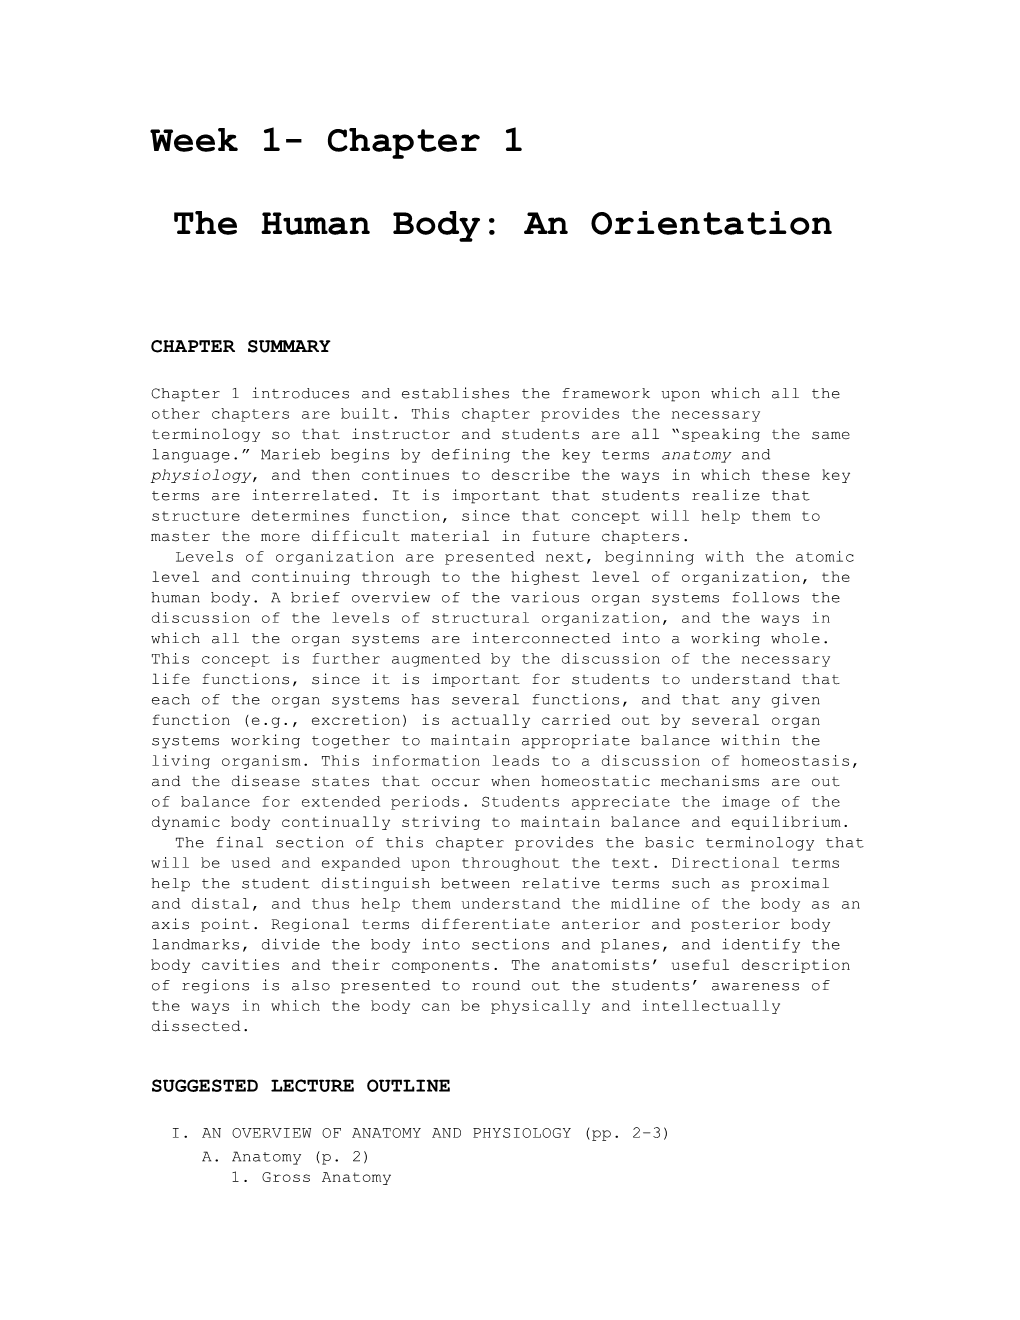 1 - the Human Body: an Orientation